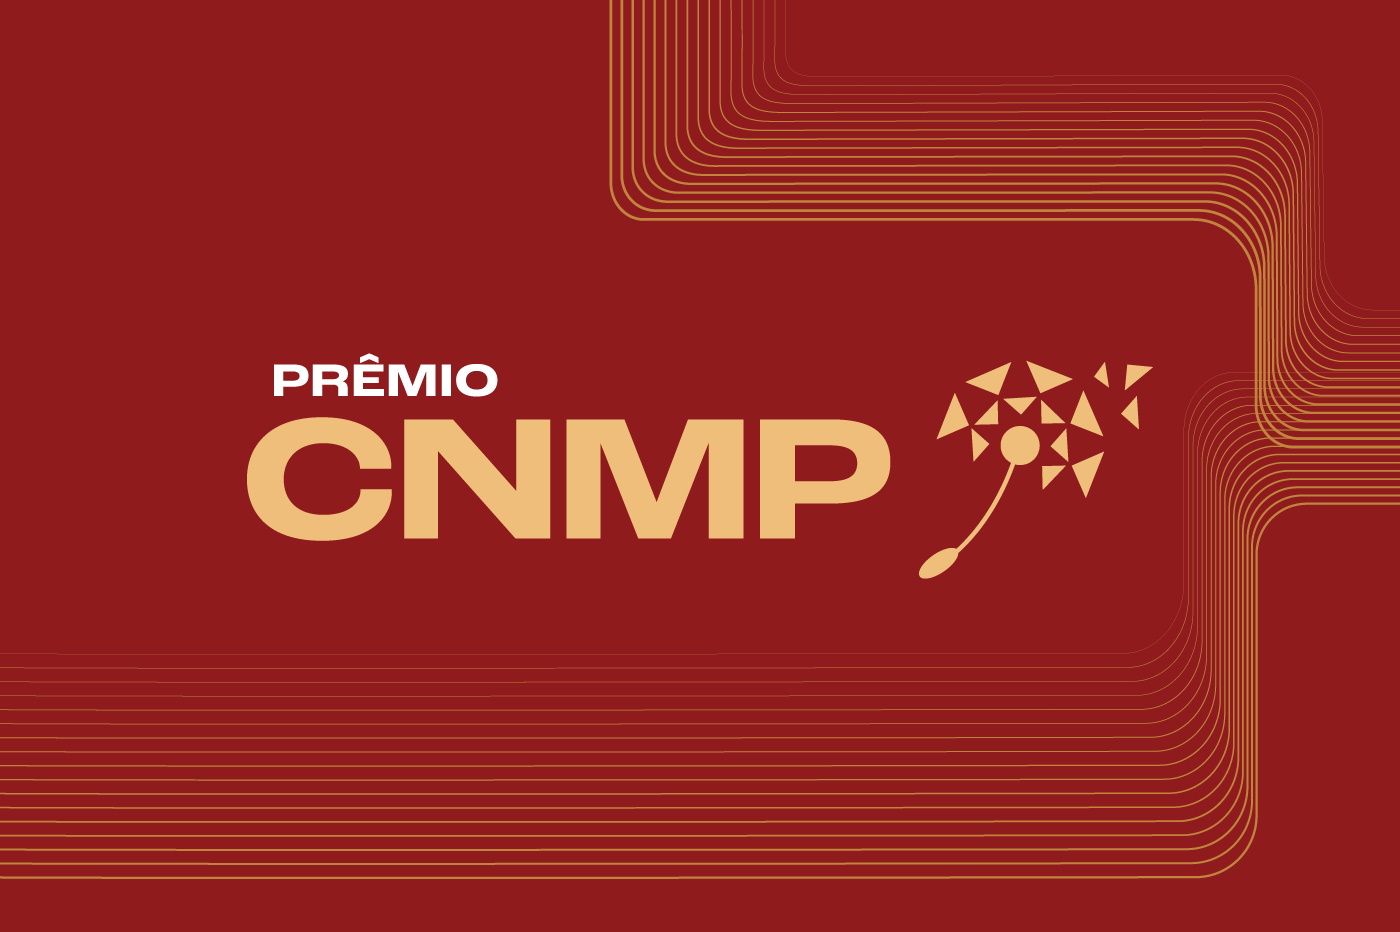 Premio CNMP Banner notícia 1400x932